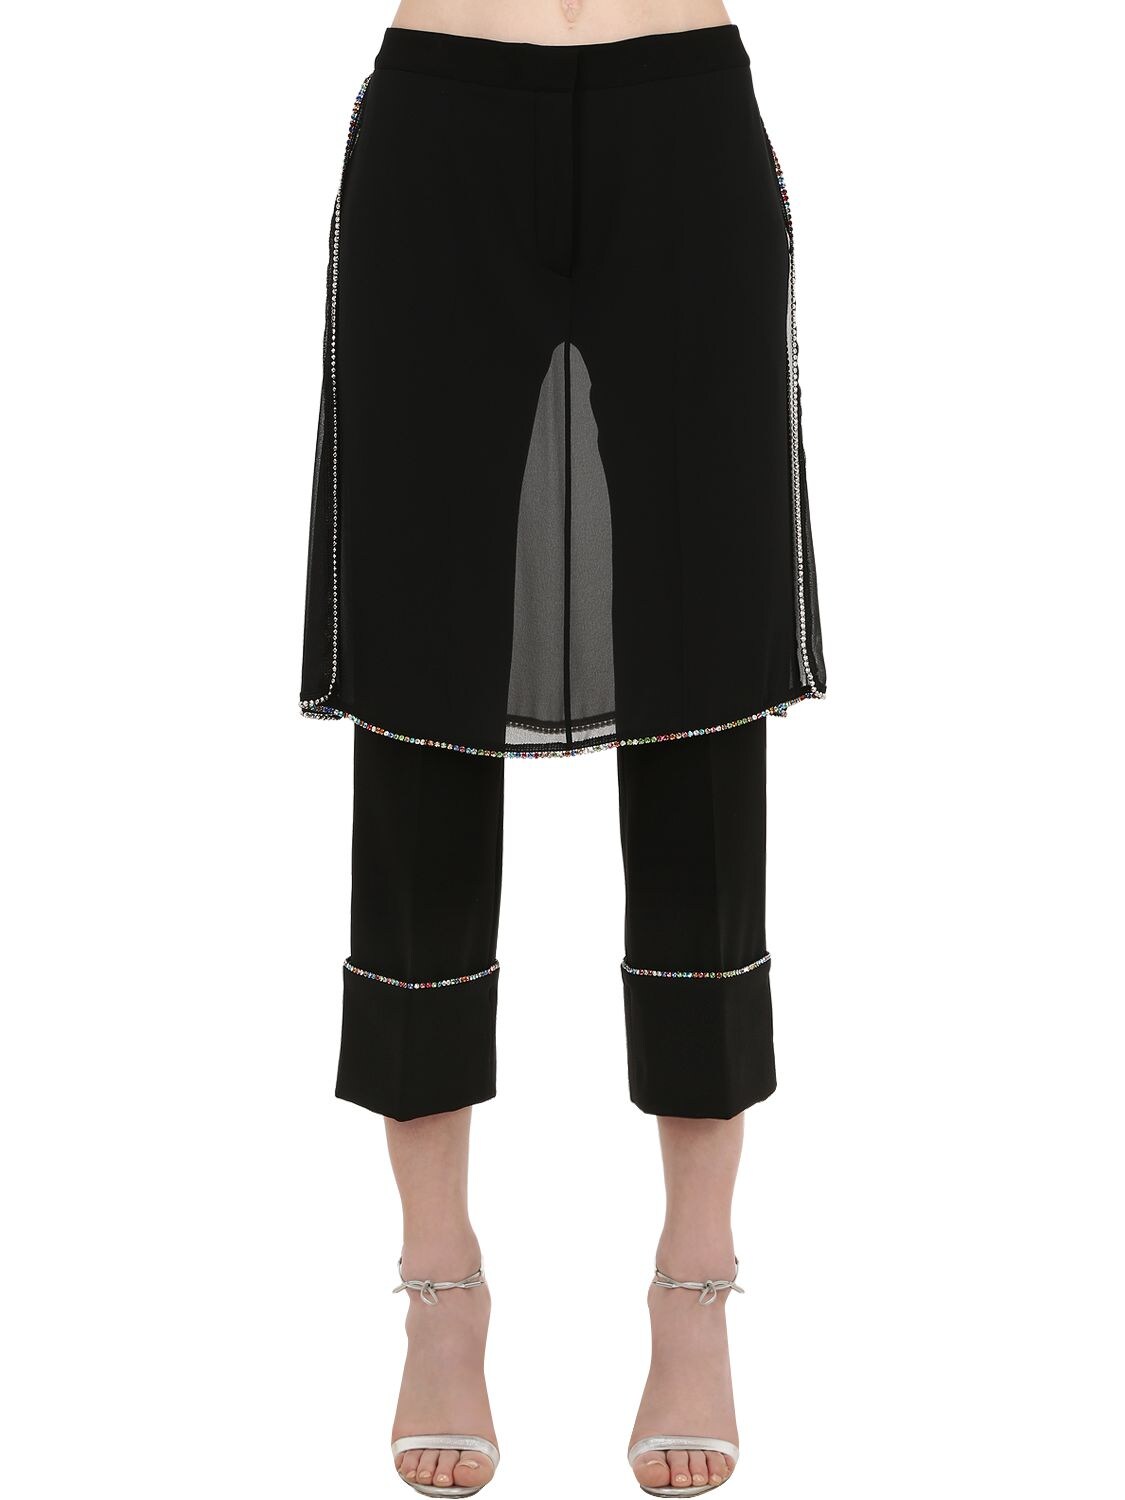 Embellished Pants W/ Skirt Panels